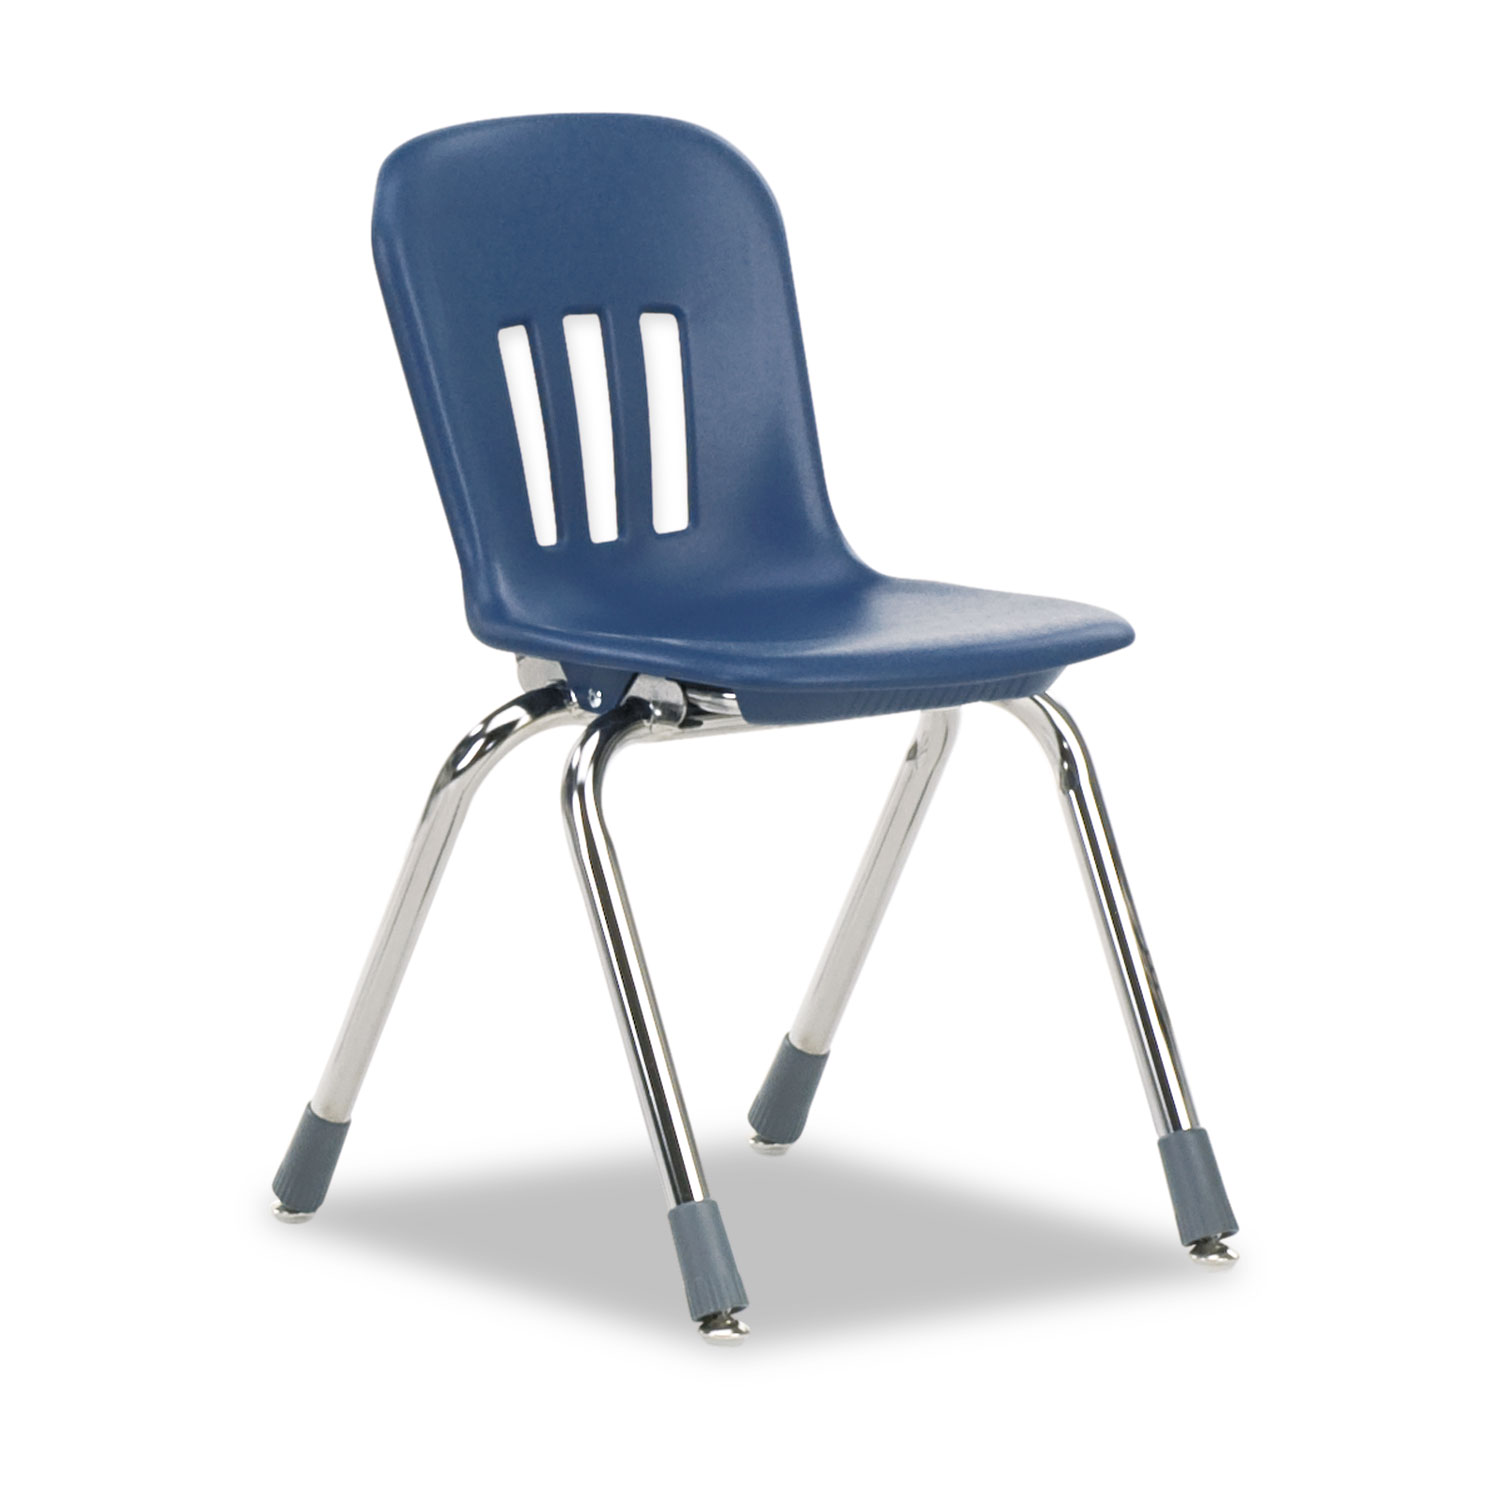 Metaphor Series Classroom Chair, 14-1/2 Seat Height, Navy Blue/Chrome, 5/Carton